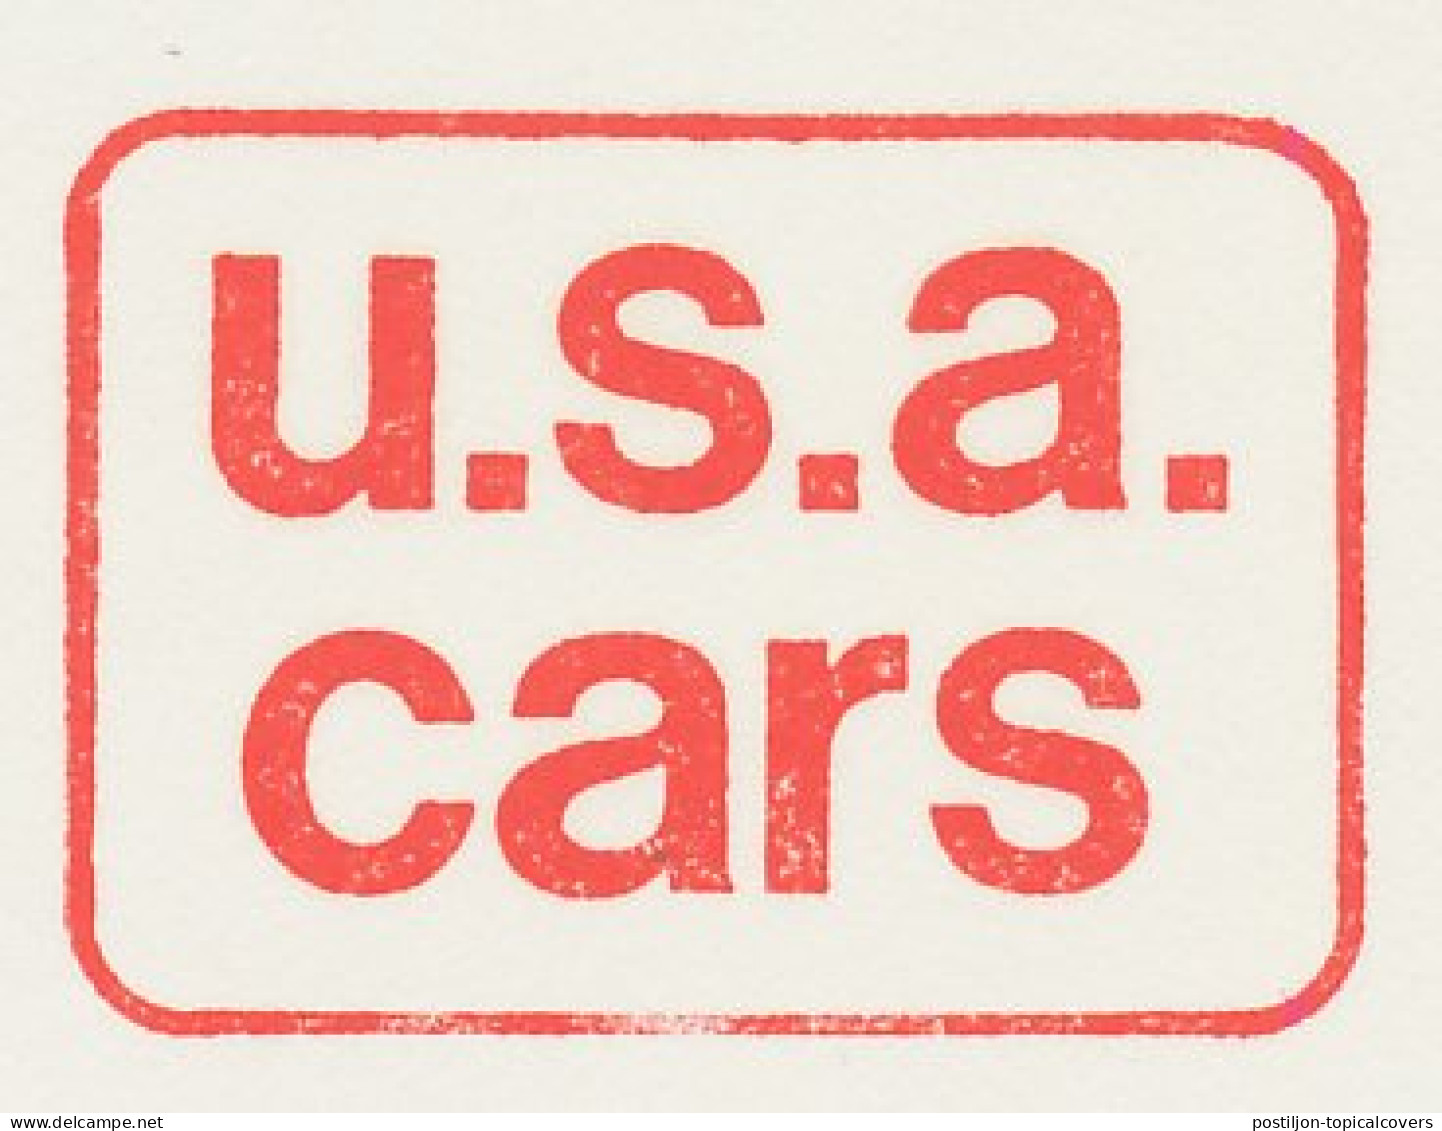 Proof / Test Meter Strip Netherlands 1978 USA Cars - Automobili